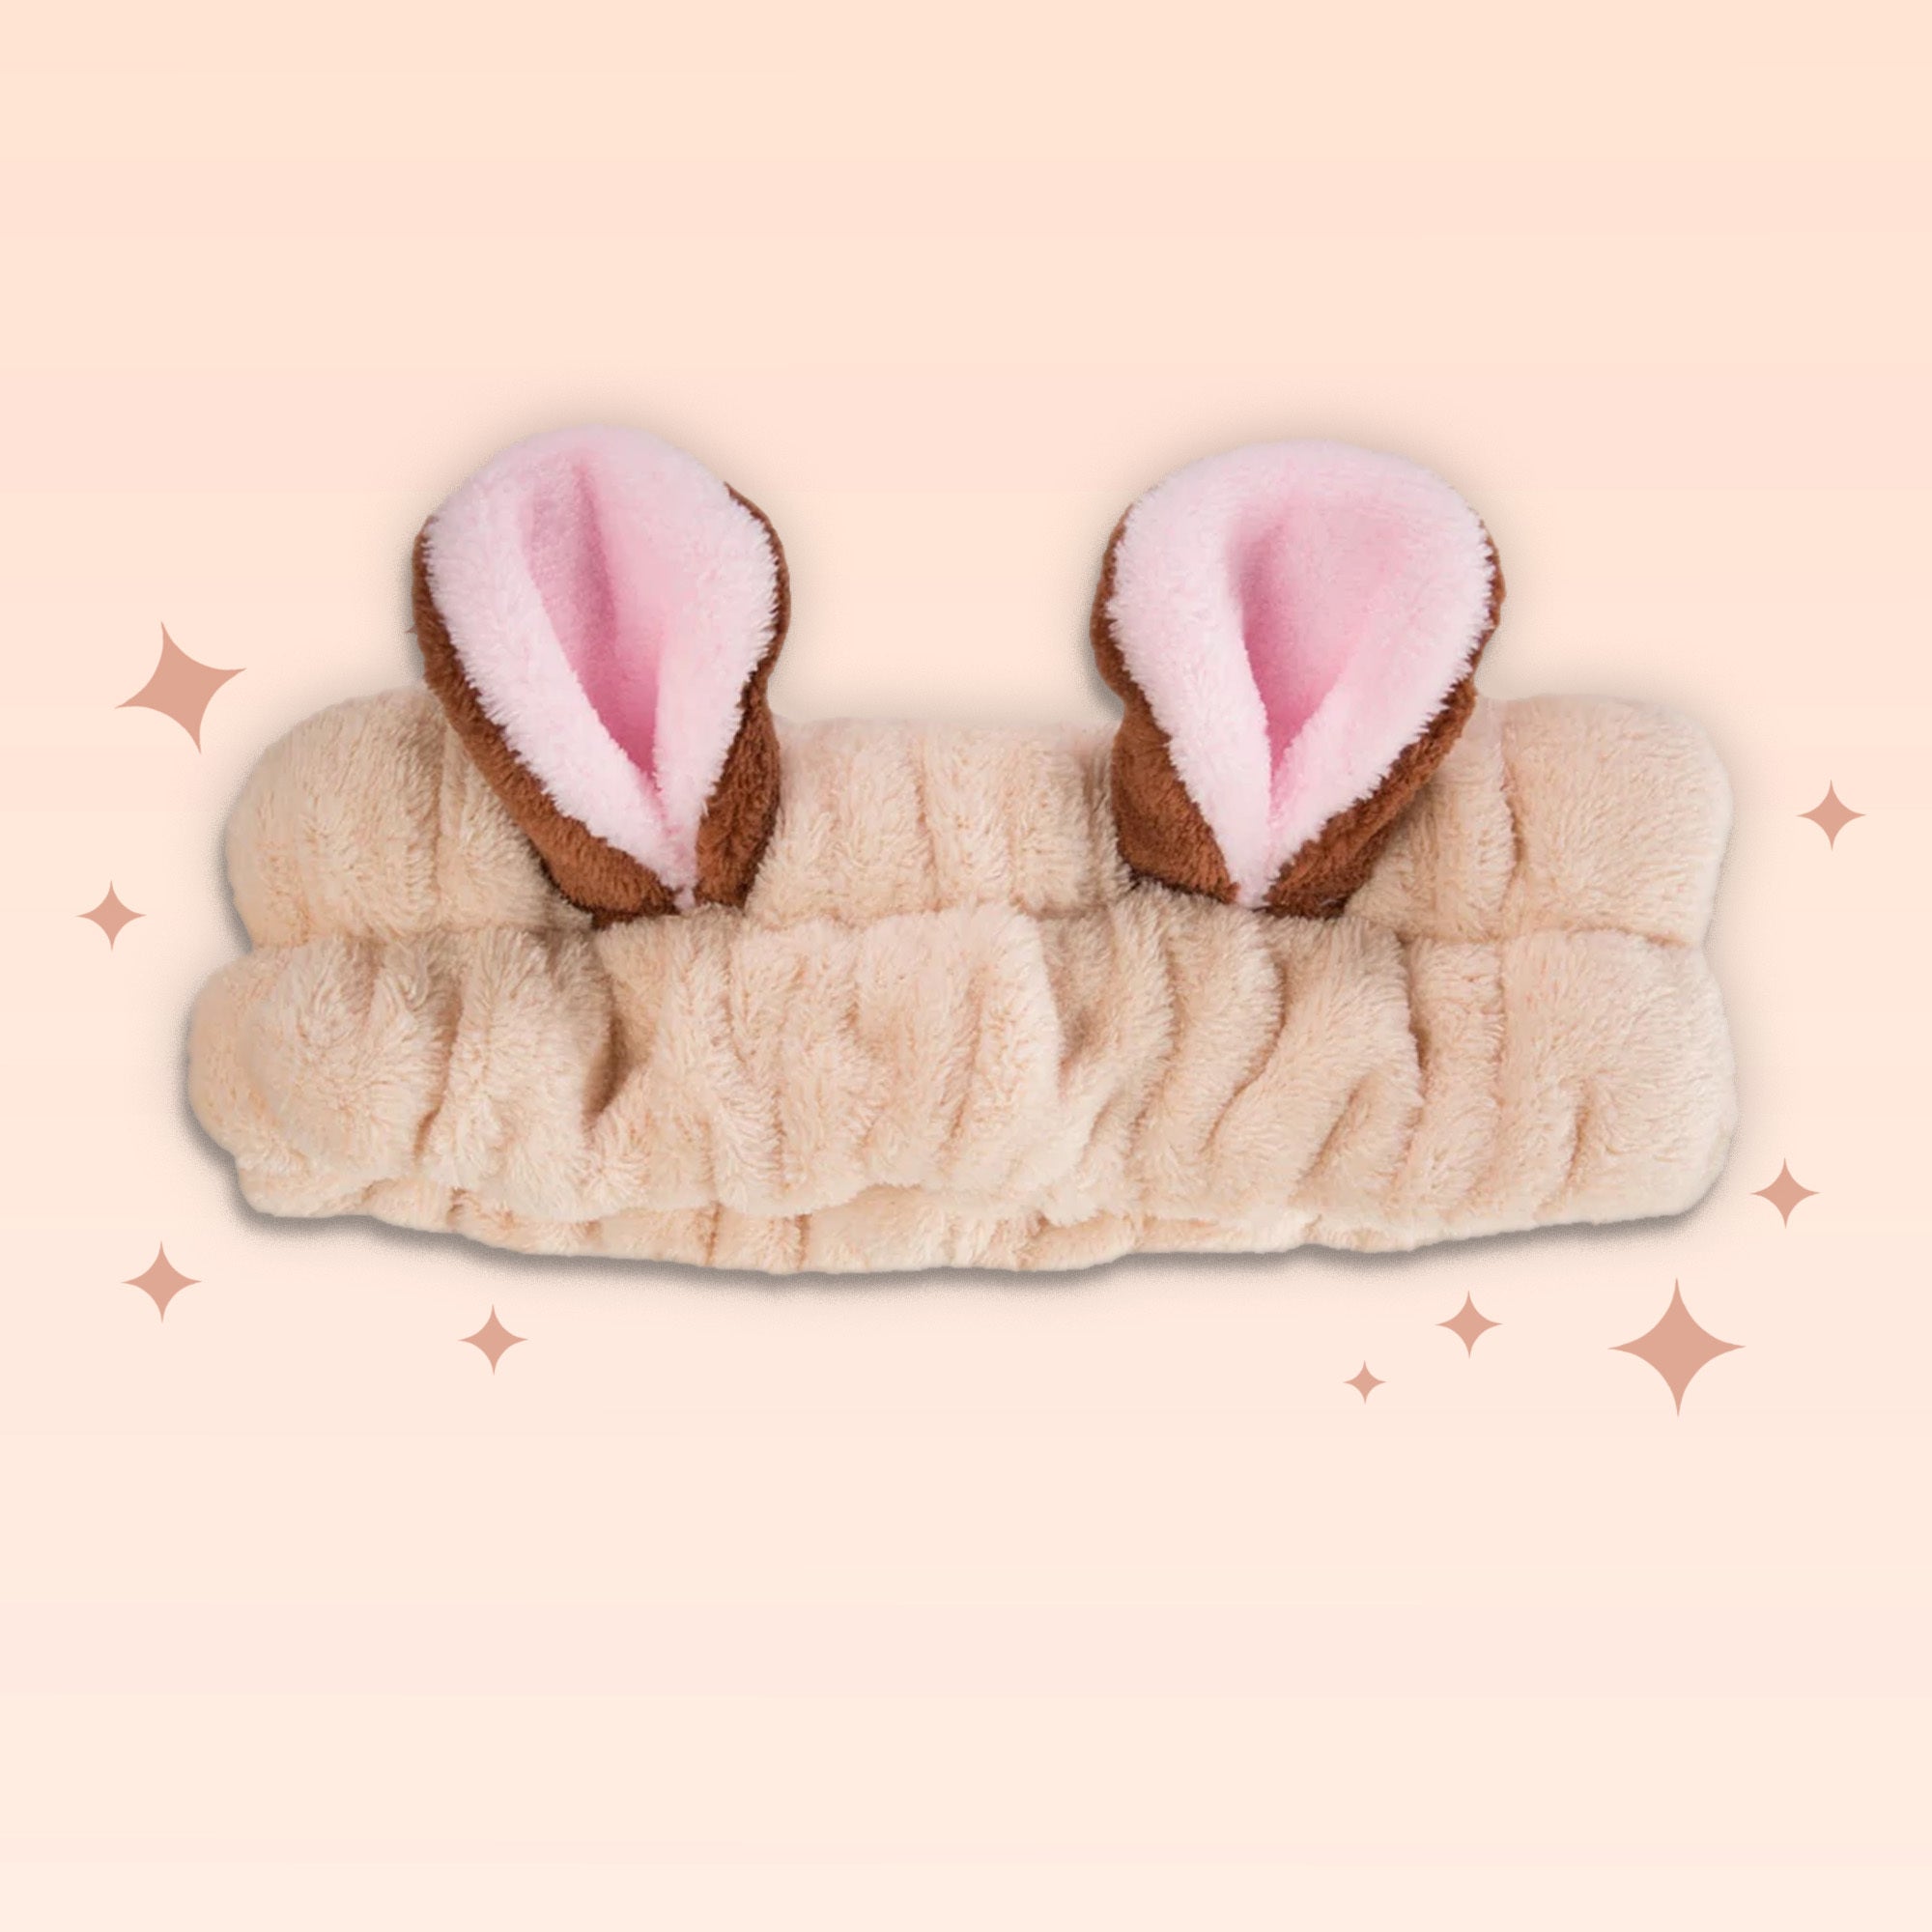 3D Teddy Headyband™ in “Bear” | Cruelty-Free & Vegan Headbands The Crème Shop 